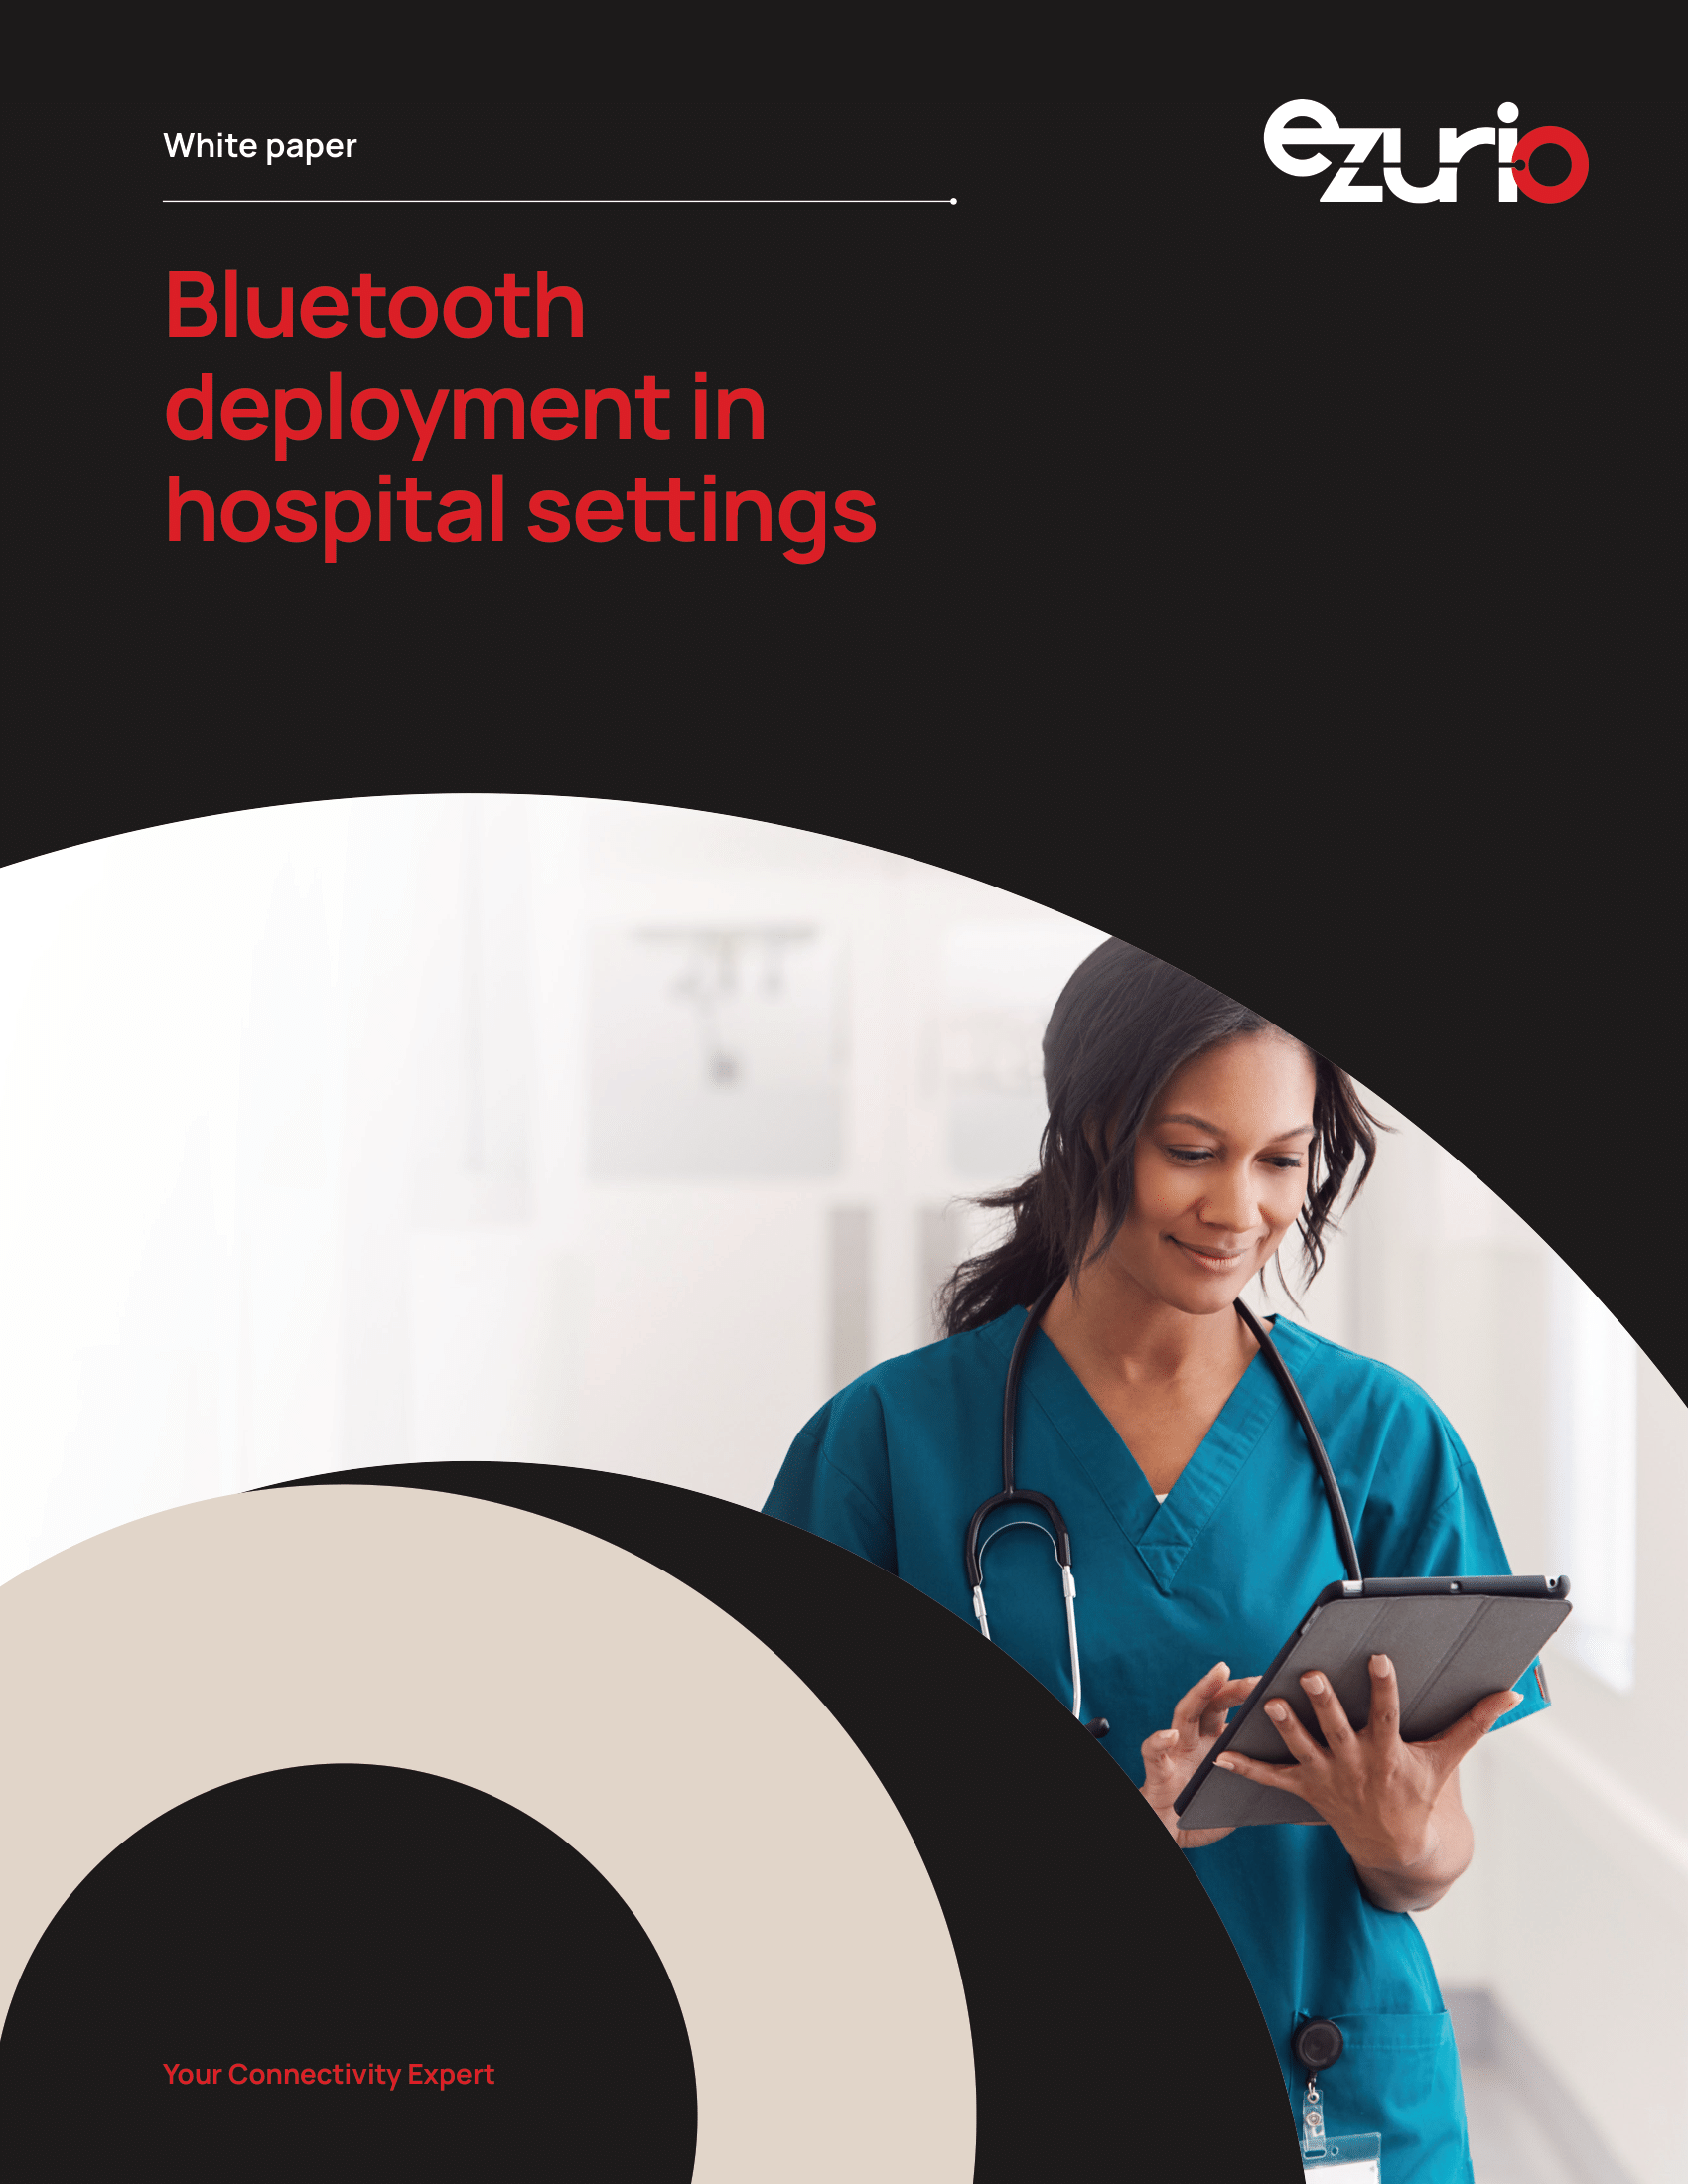 Bluetooth Deployment in Hospital Settings